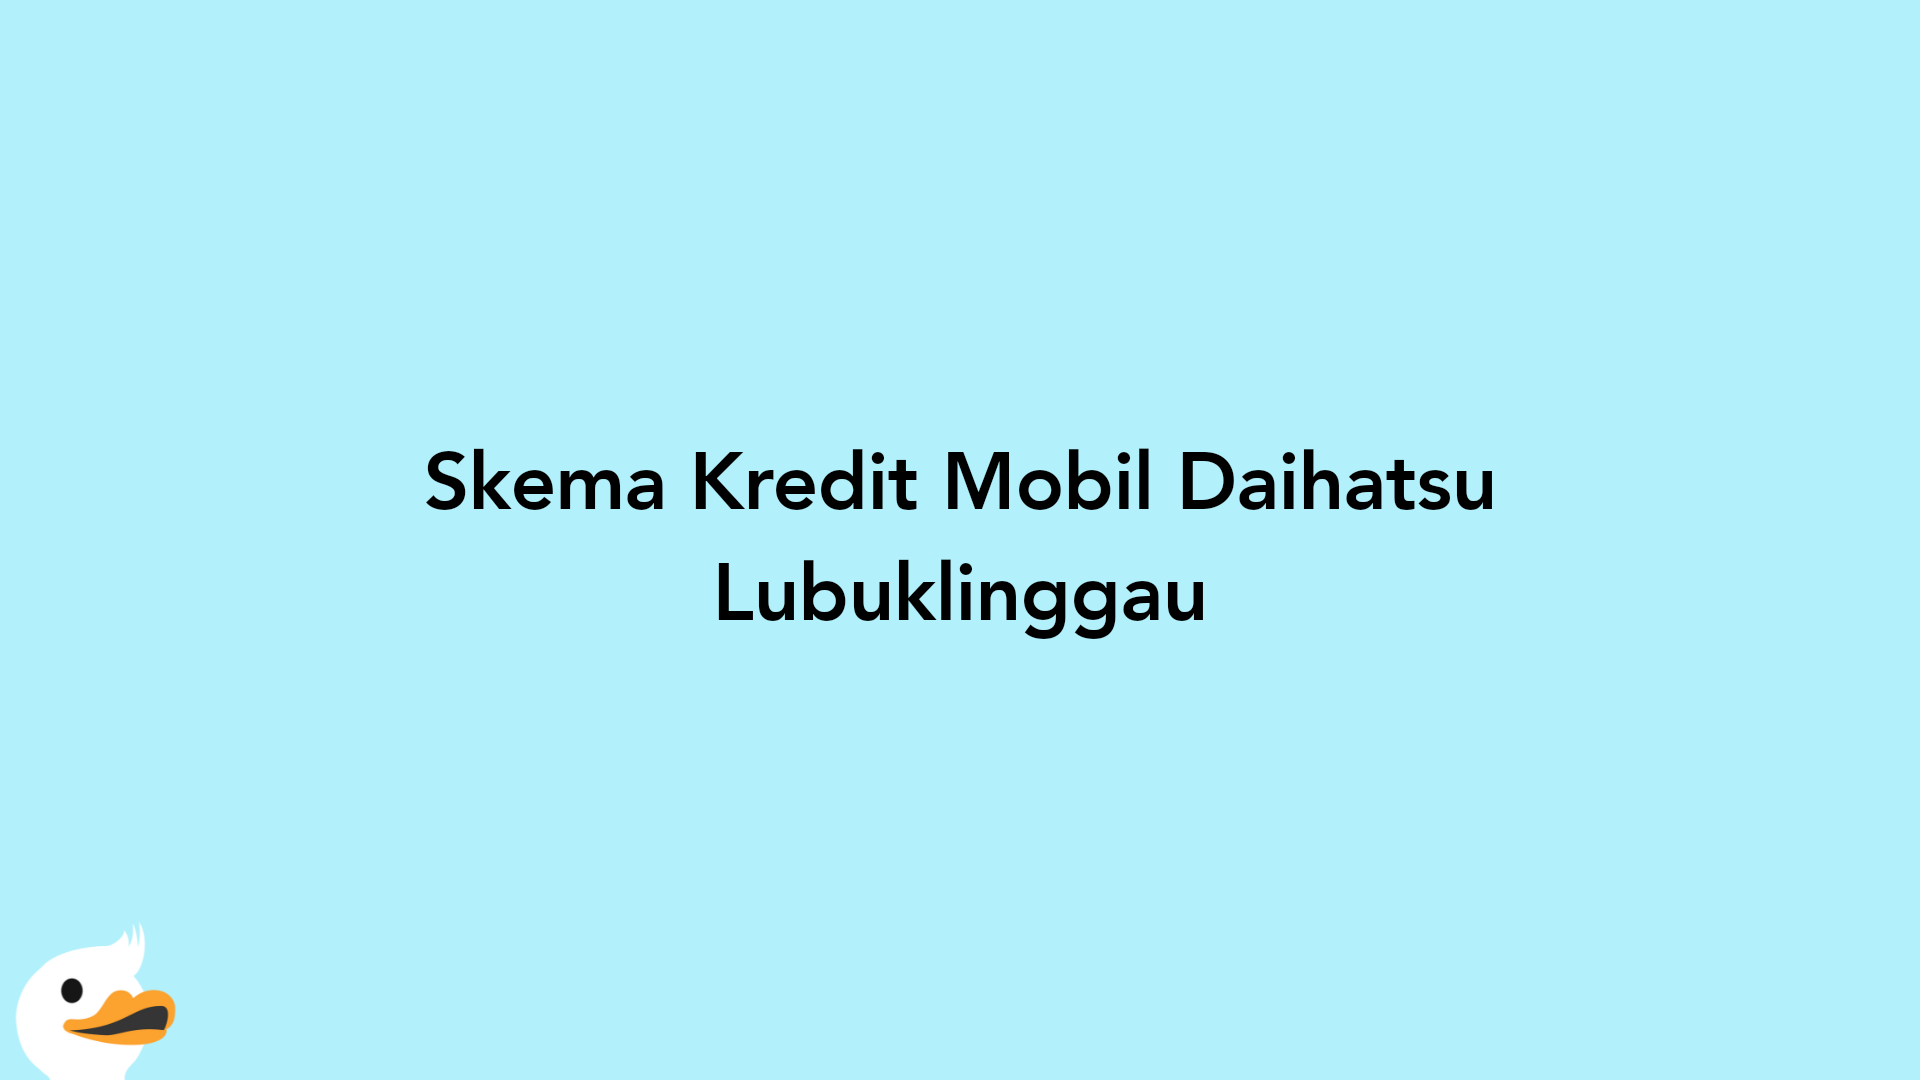 Skema Kredit Mobil Daihatsu Lubuklinggau